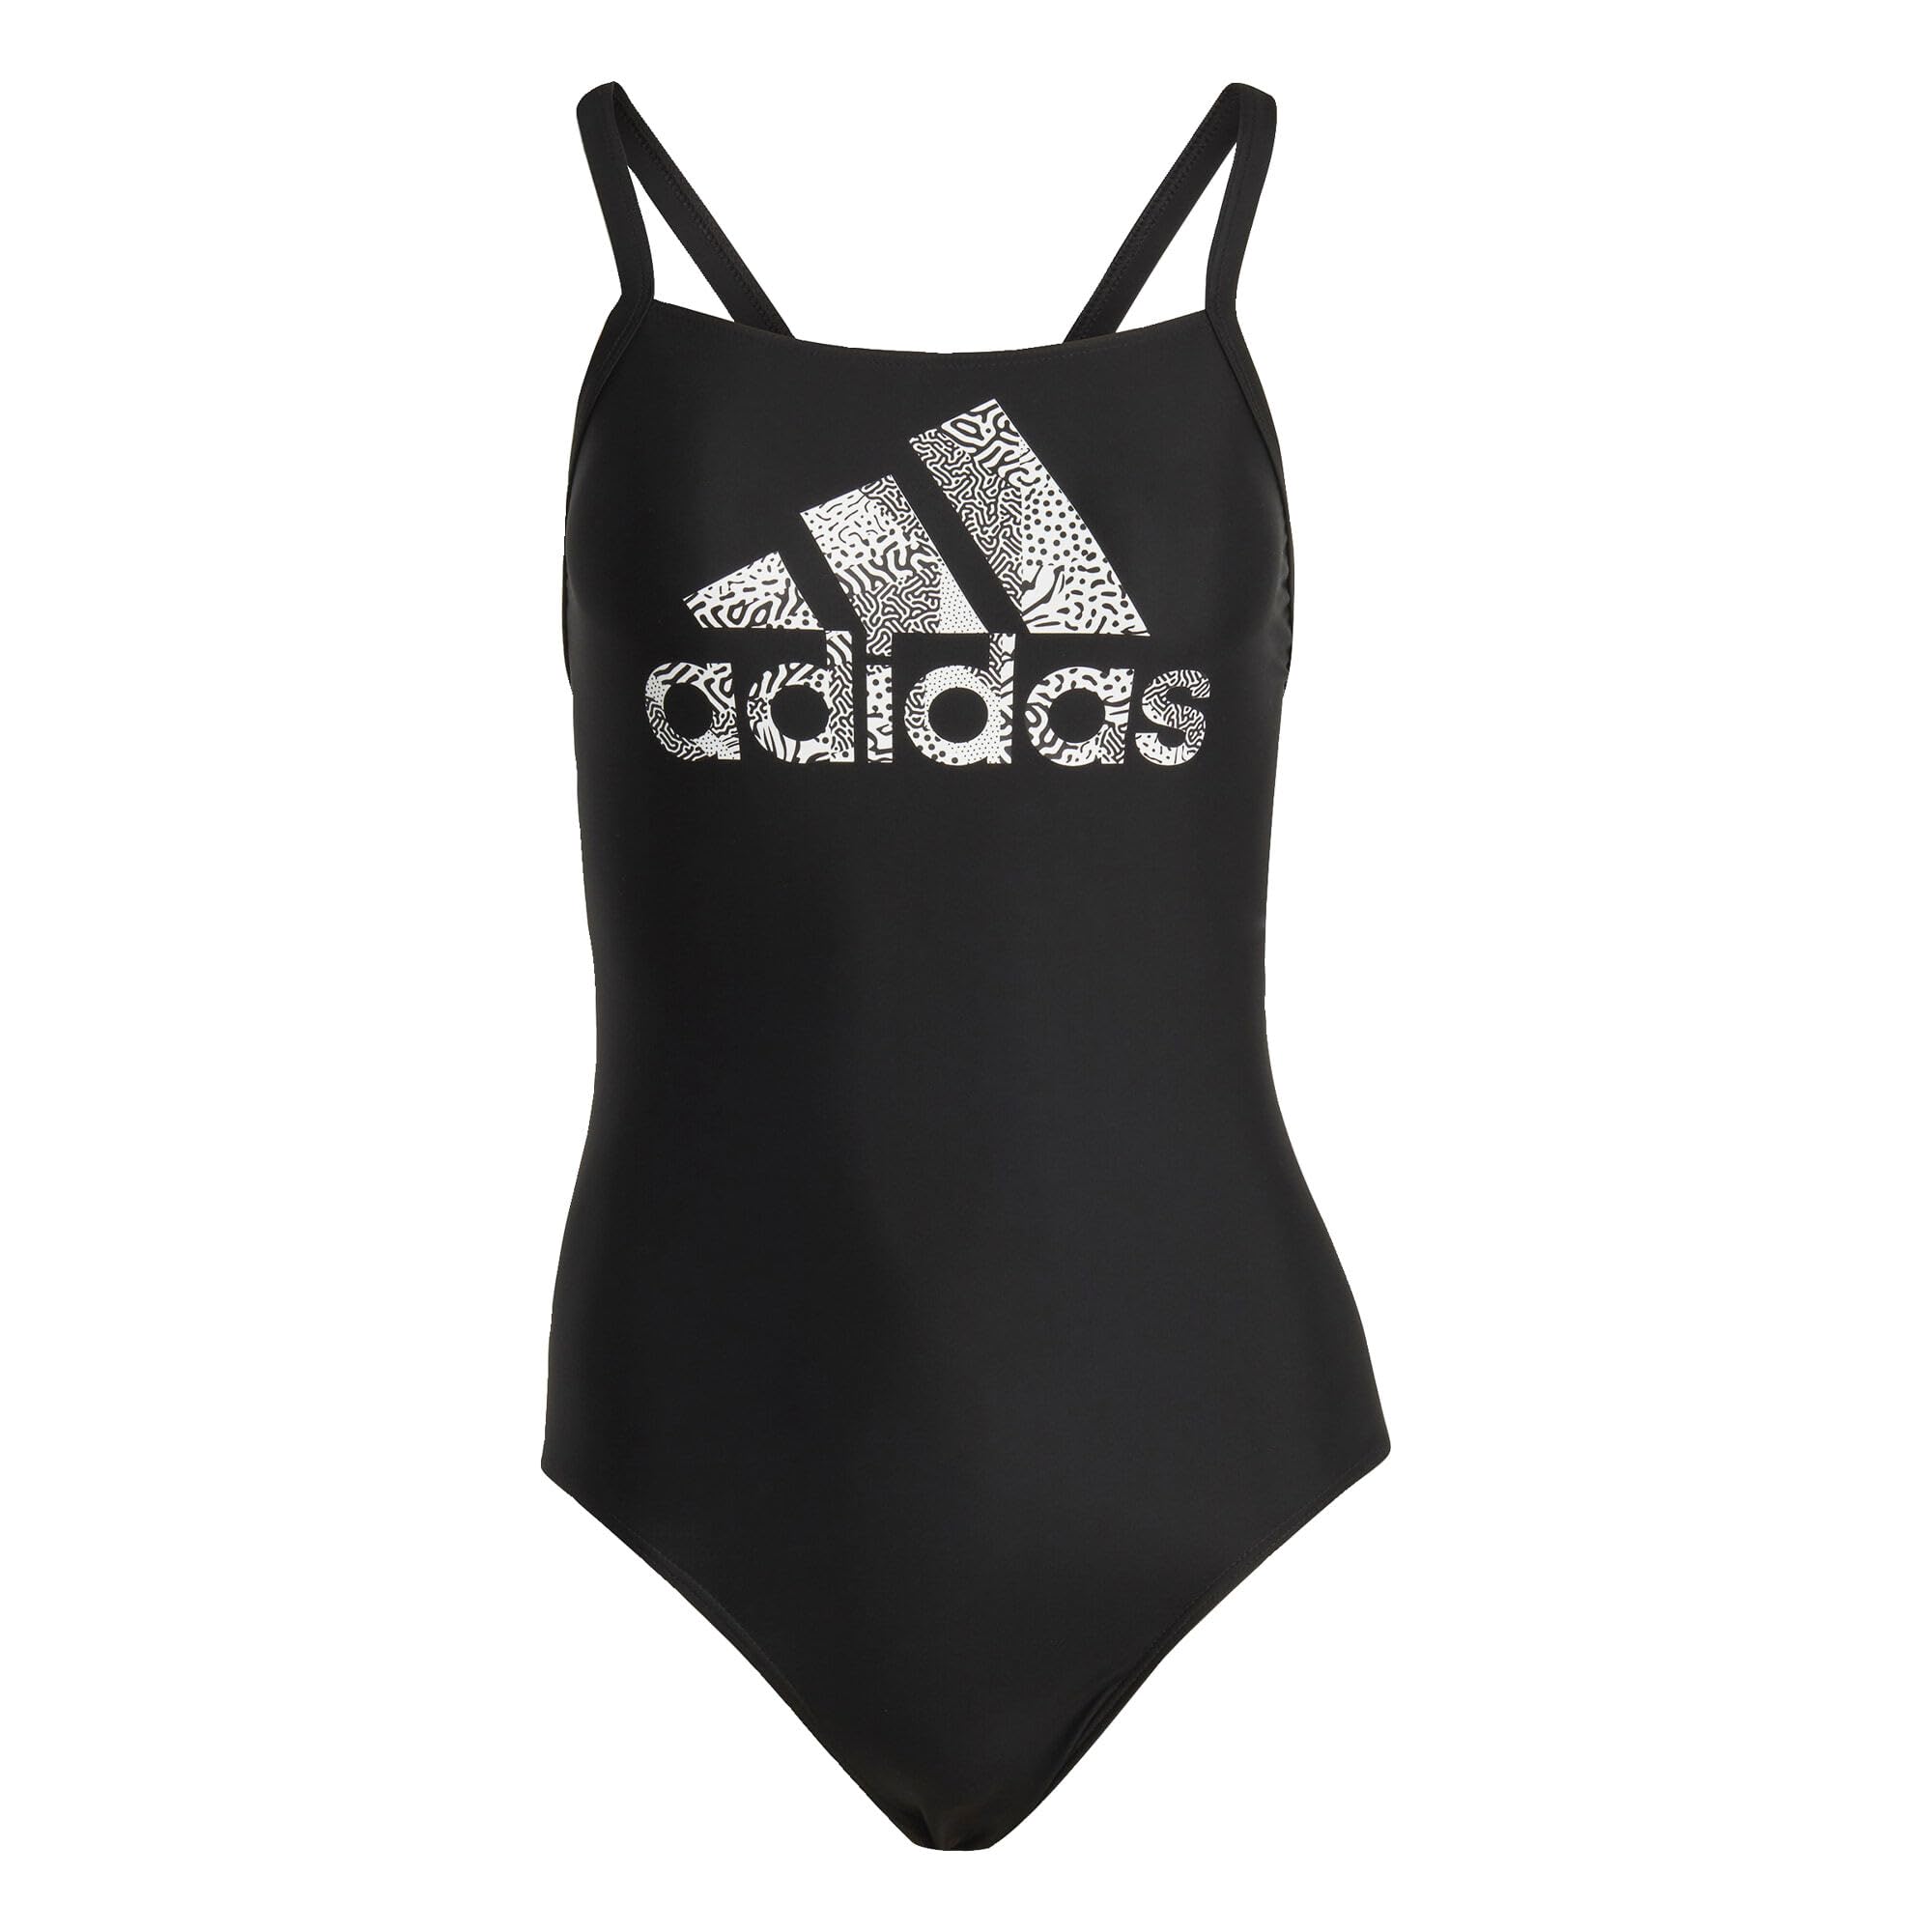 adidas Women's Big Logo Suit Swimsuit, Black/White, 40